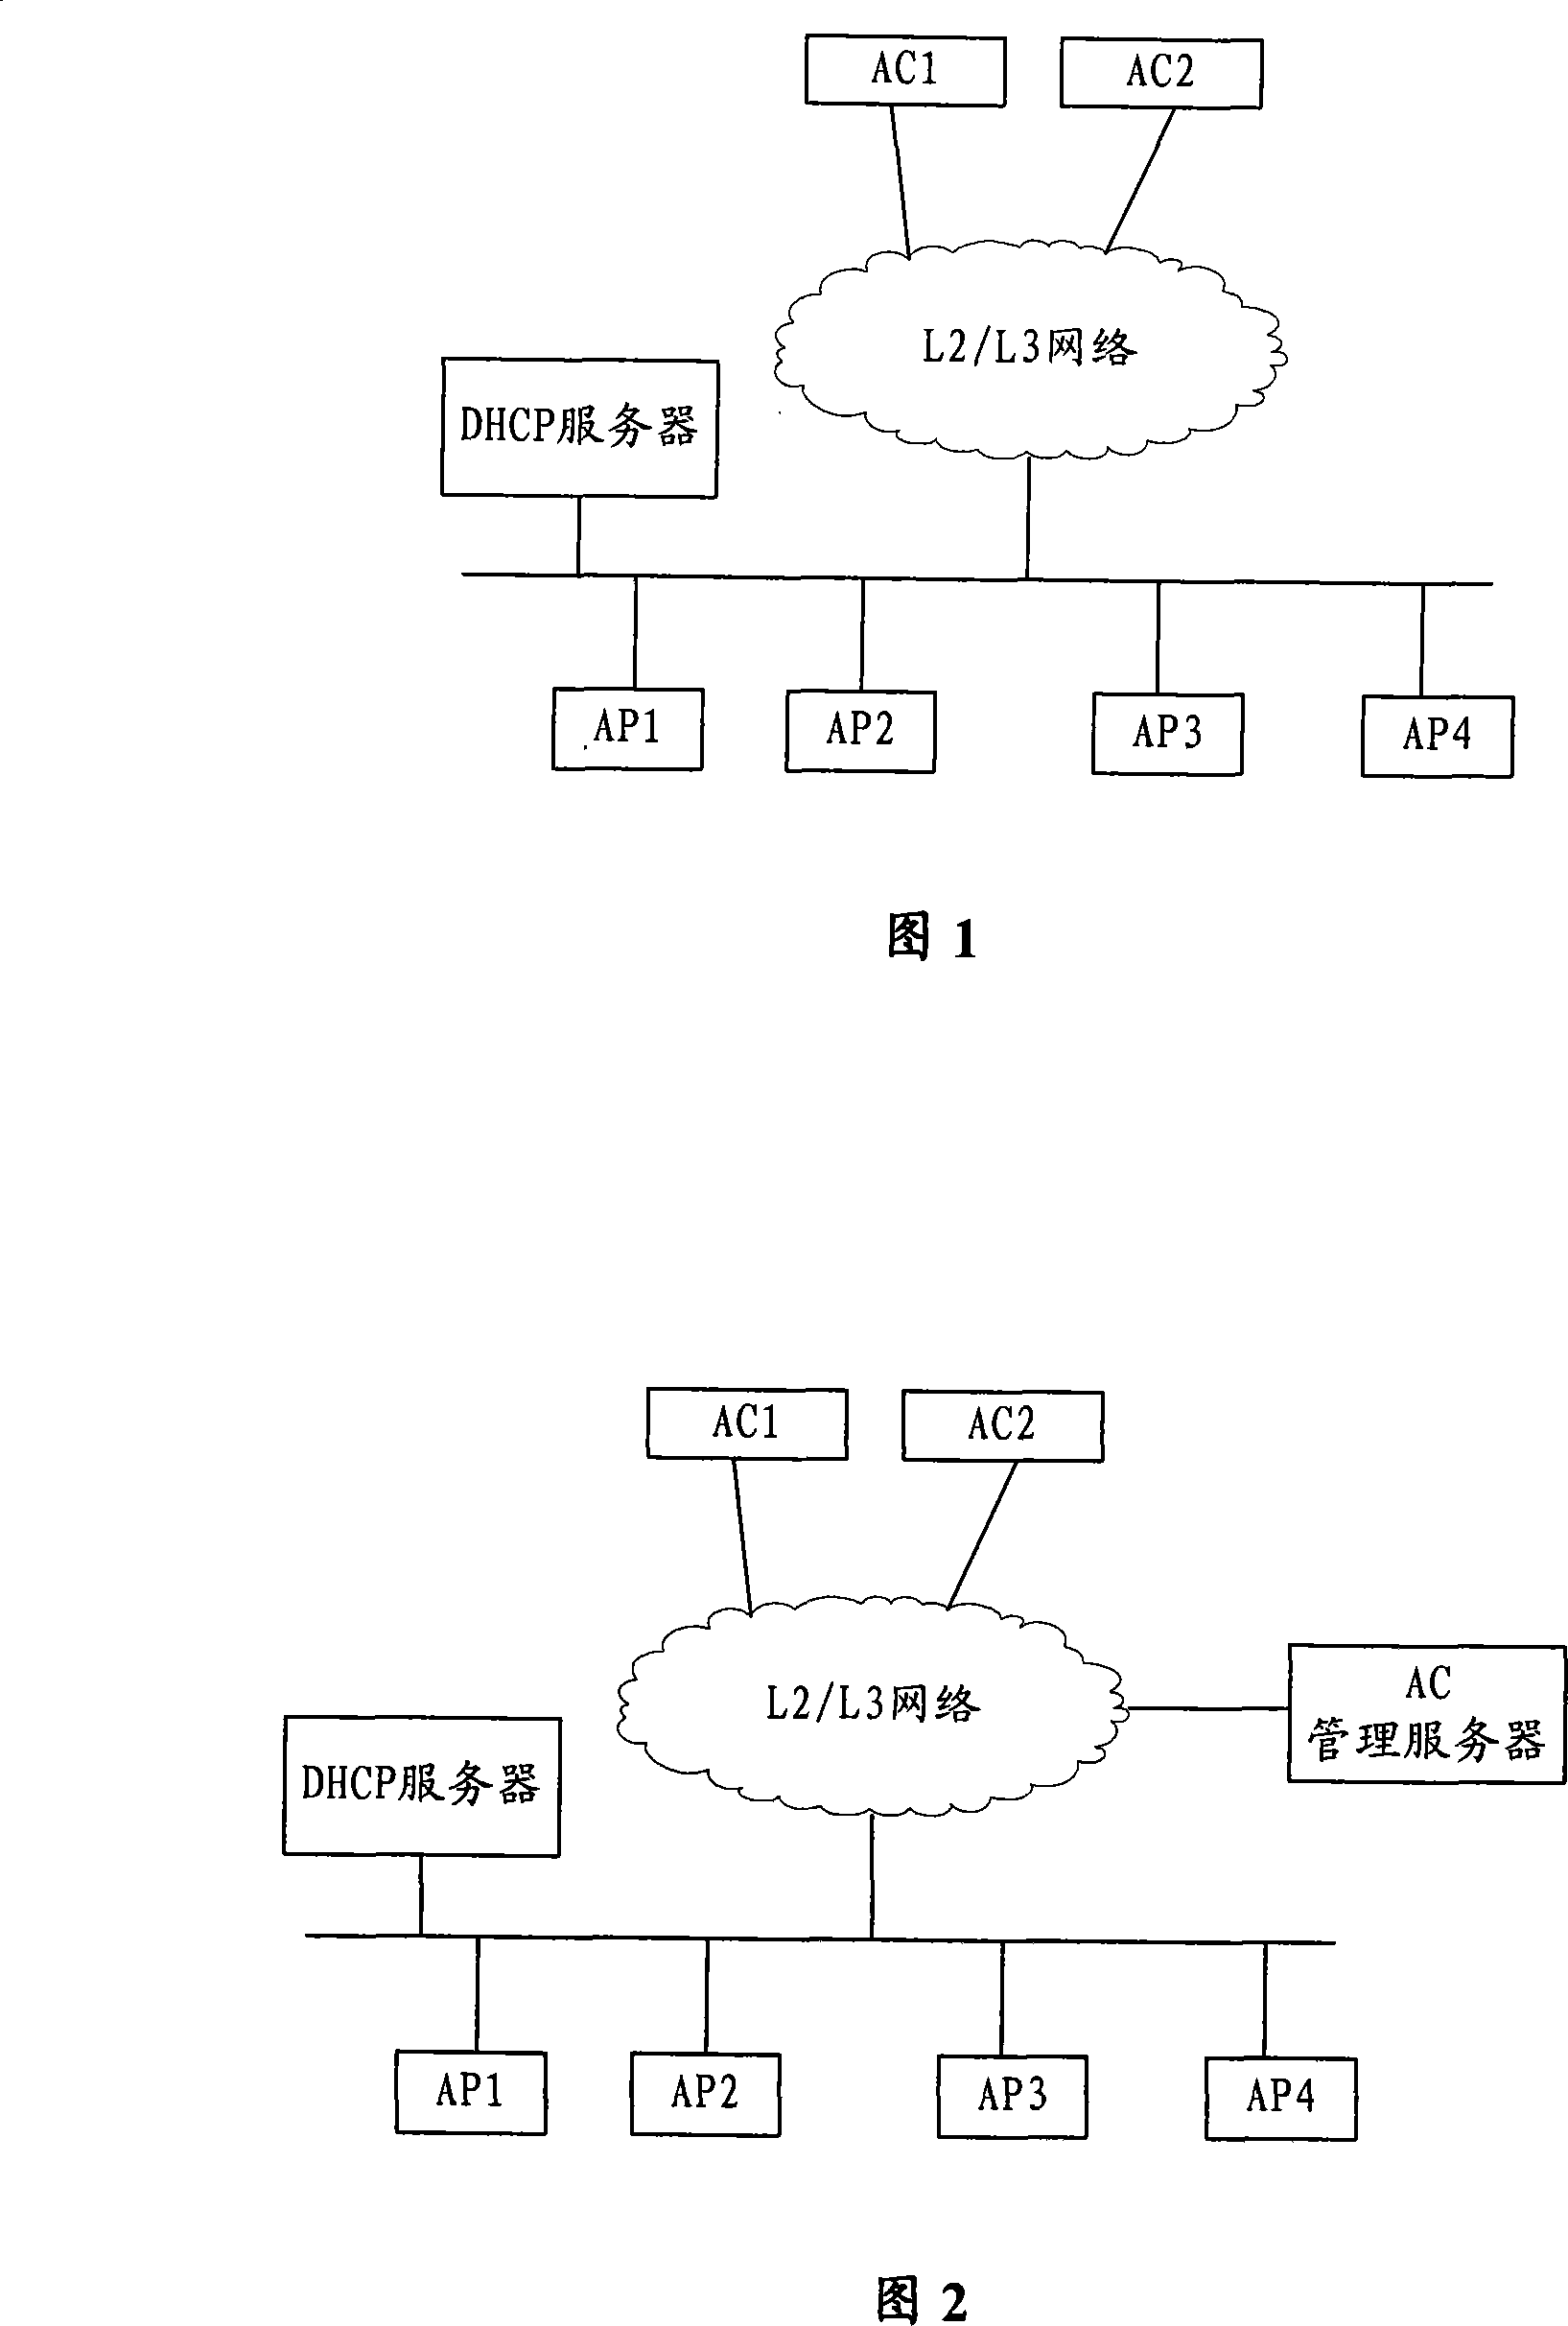 Login method and apparatus for AP